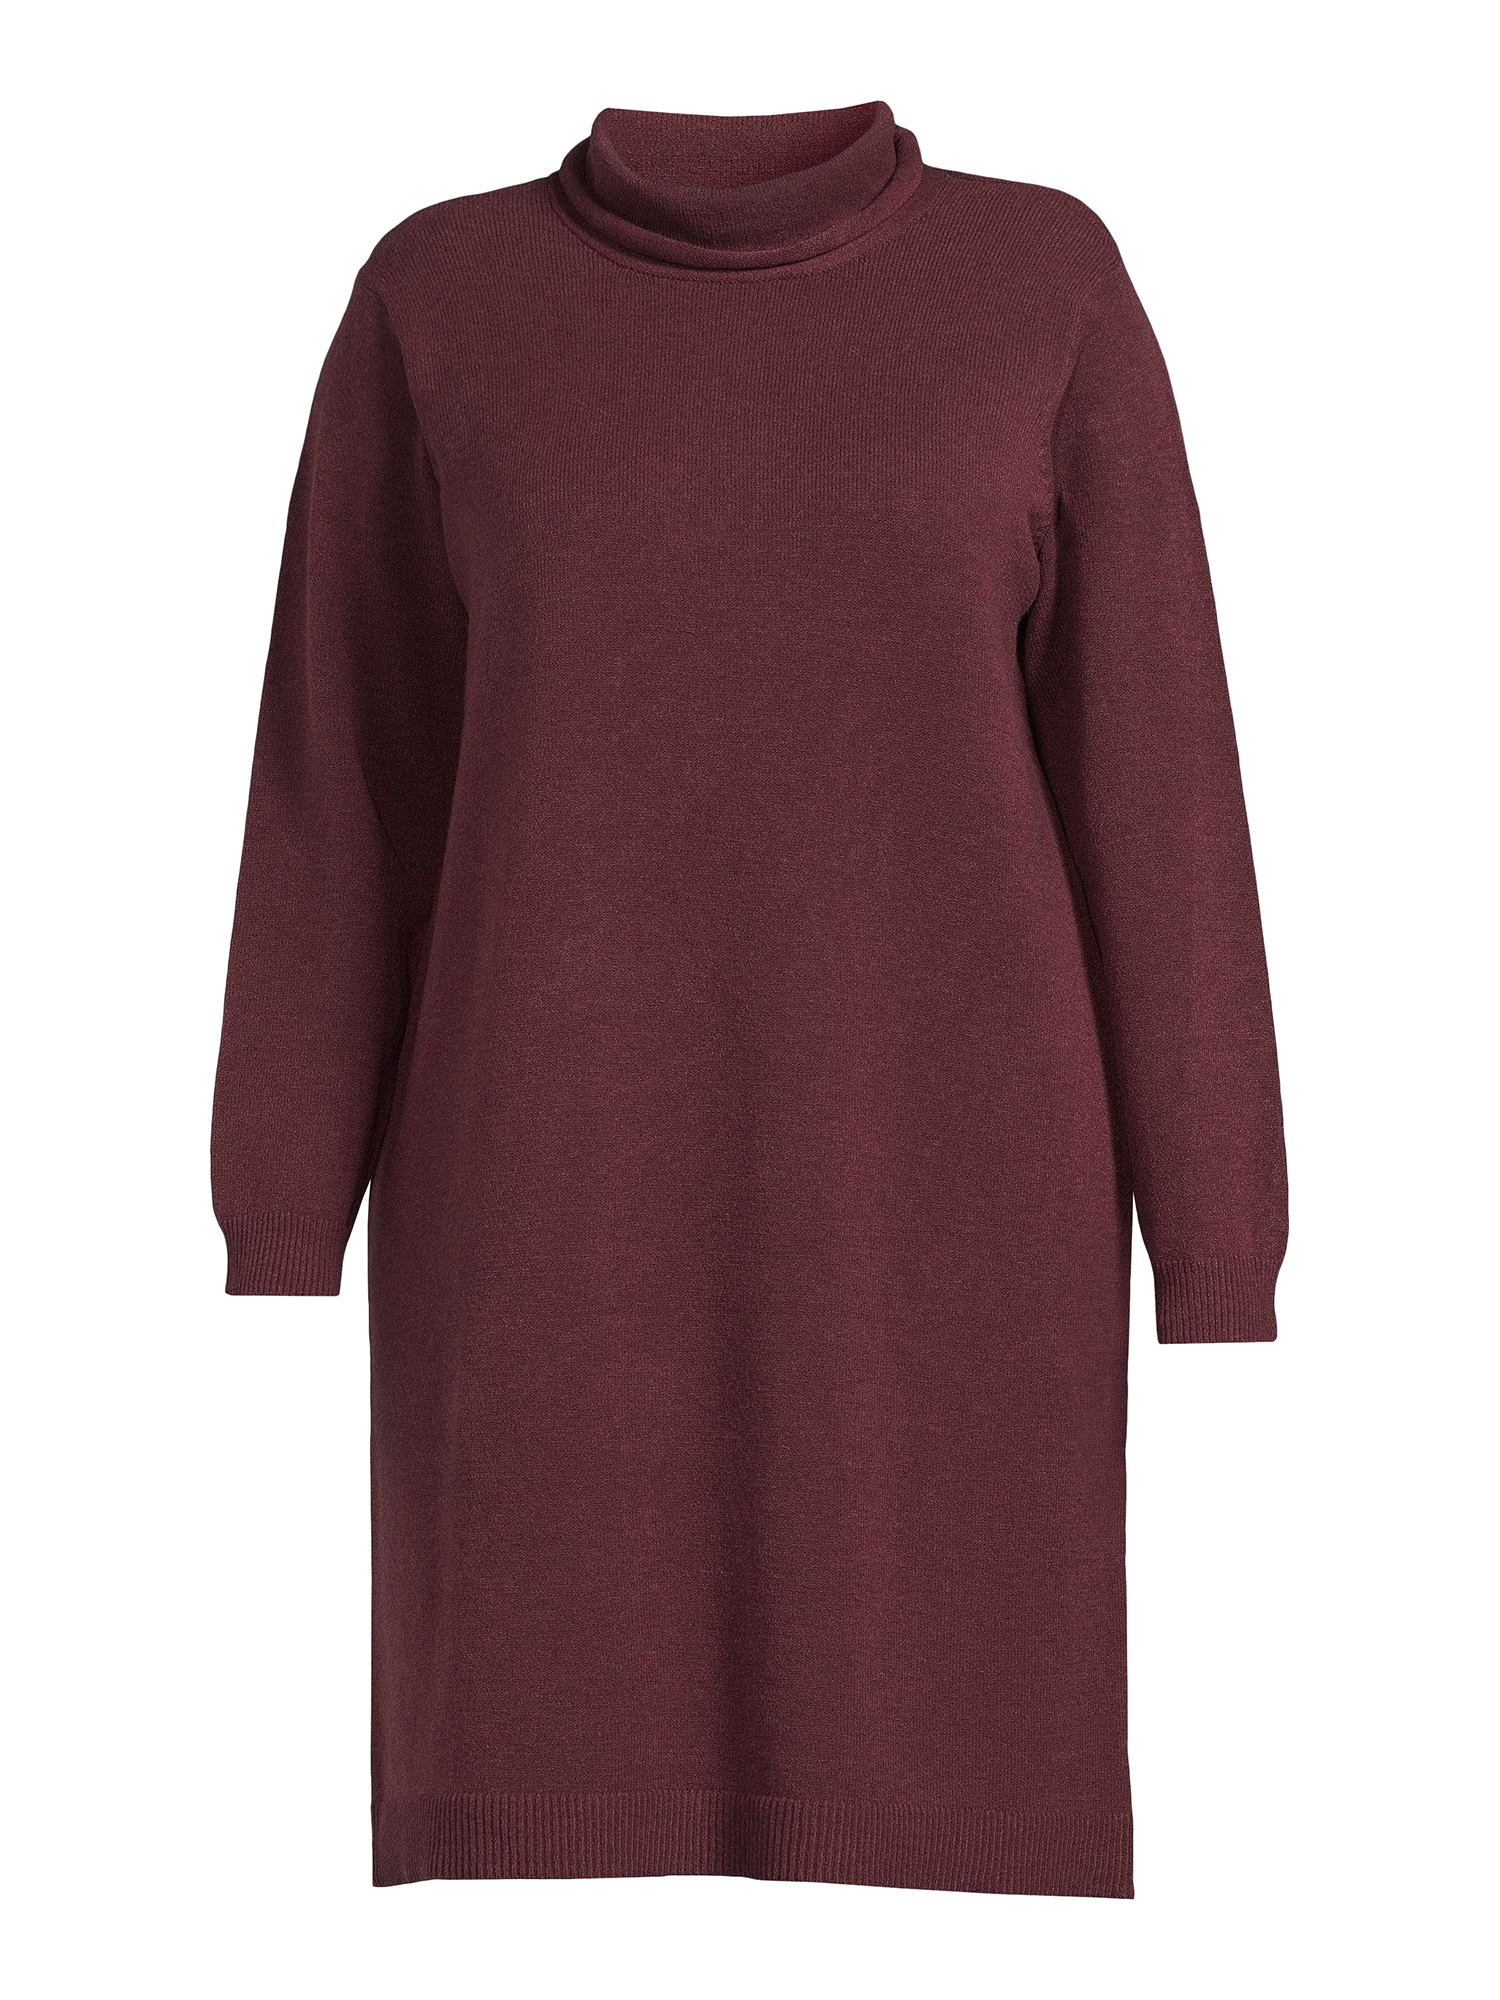 Terra & Sky Women's Plus Size Turtleneck Tunic Length Sweater Dress - image 5 of 5